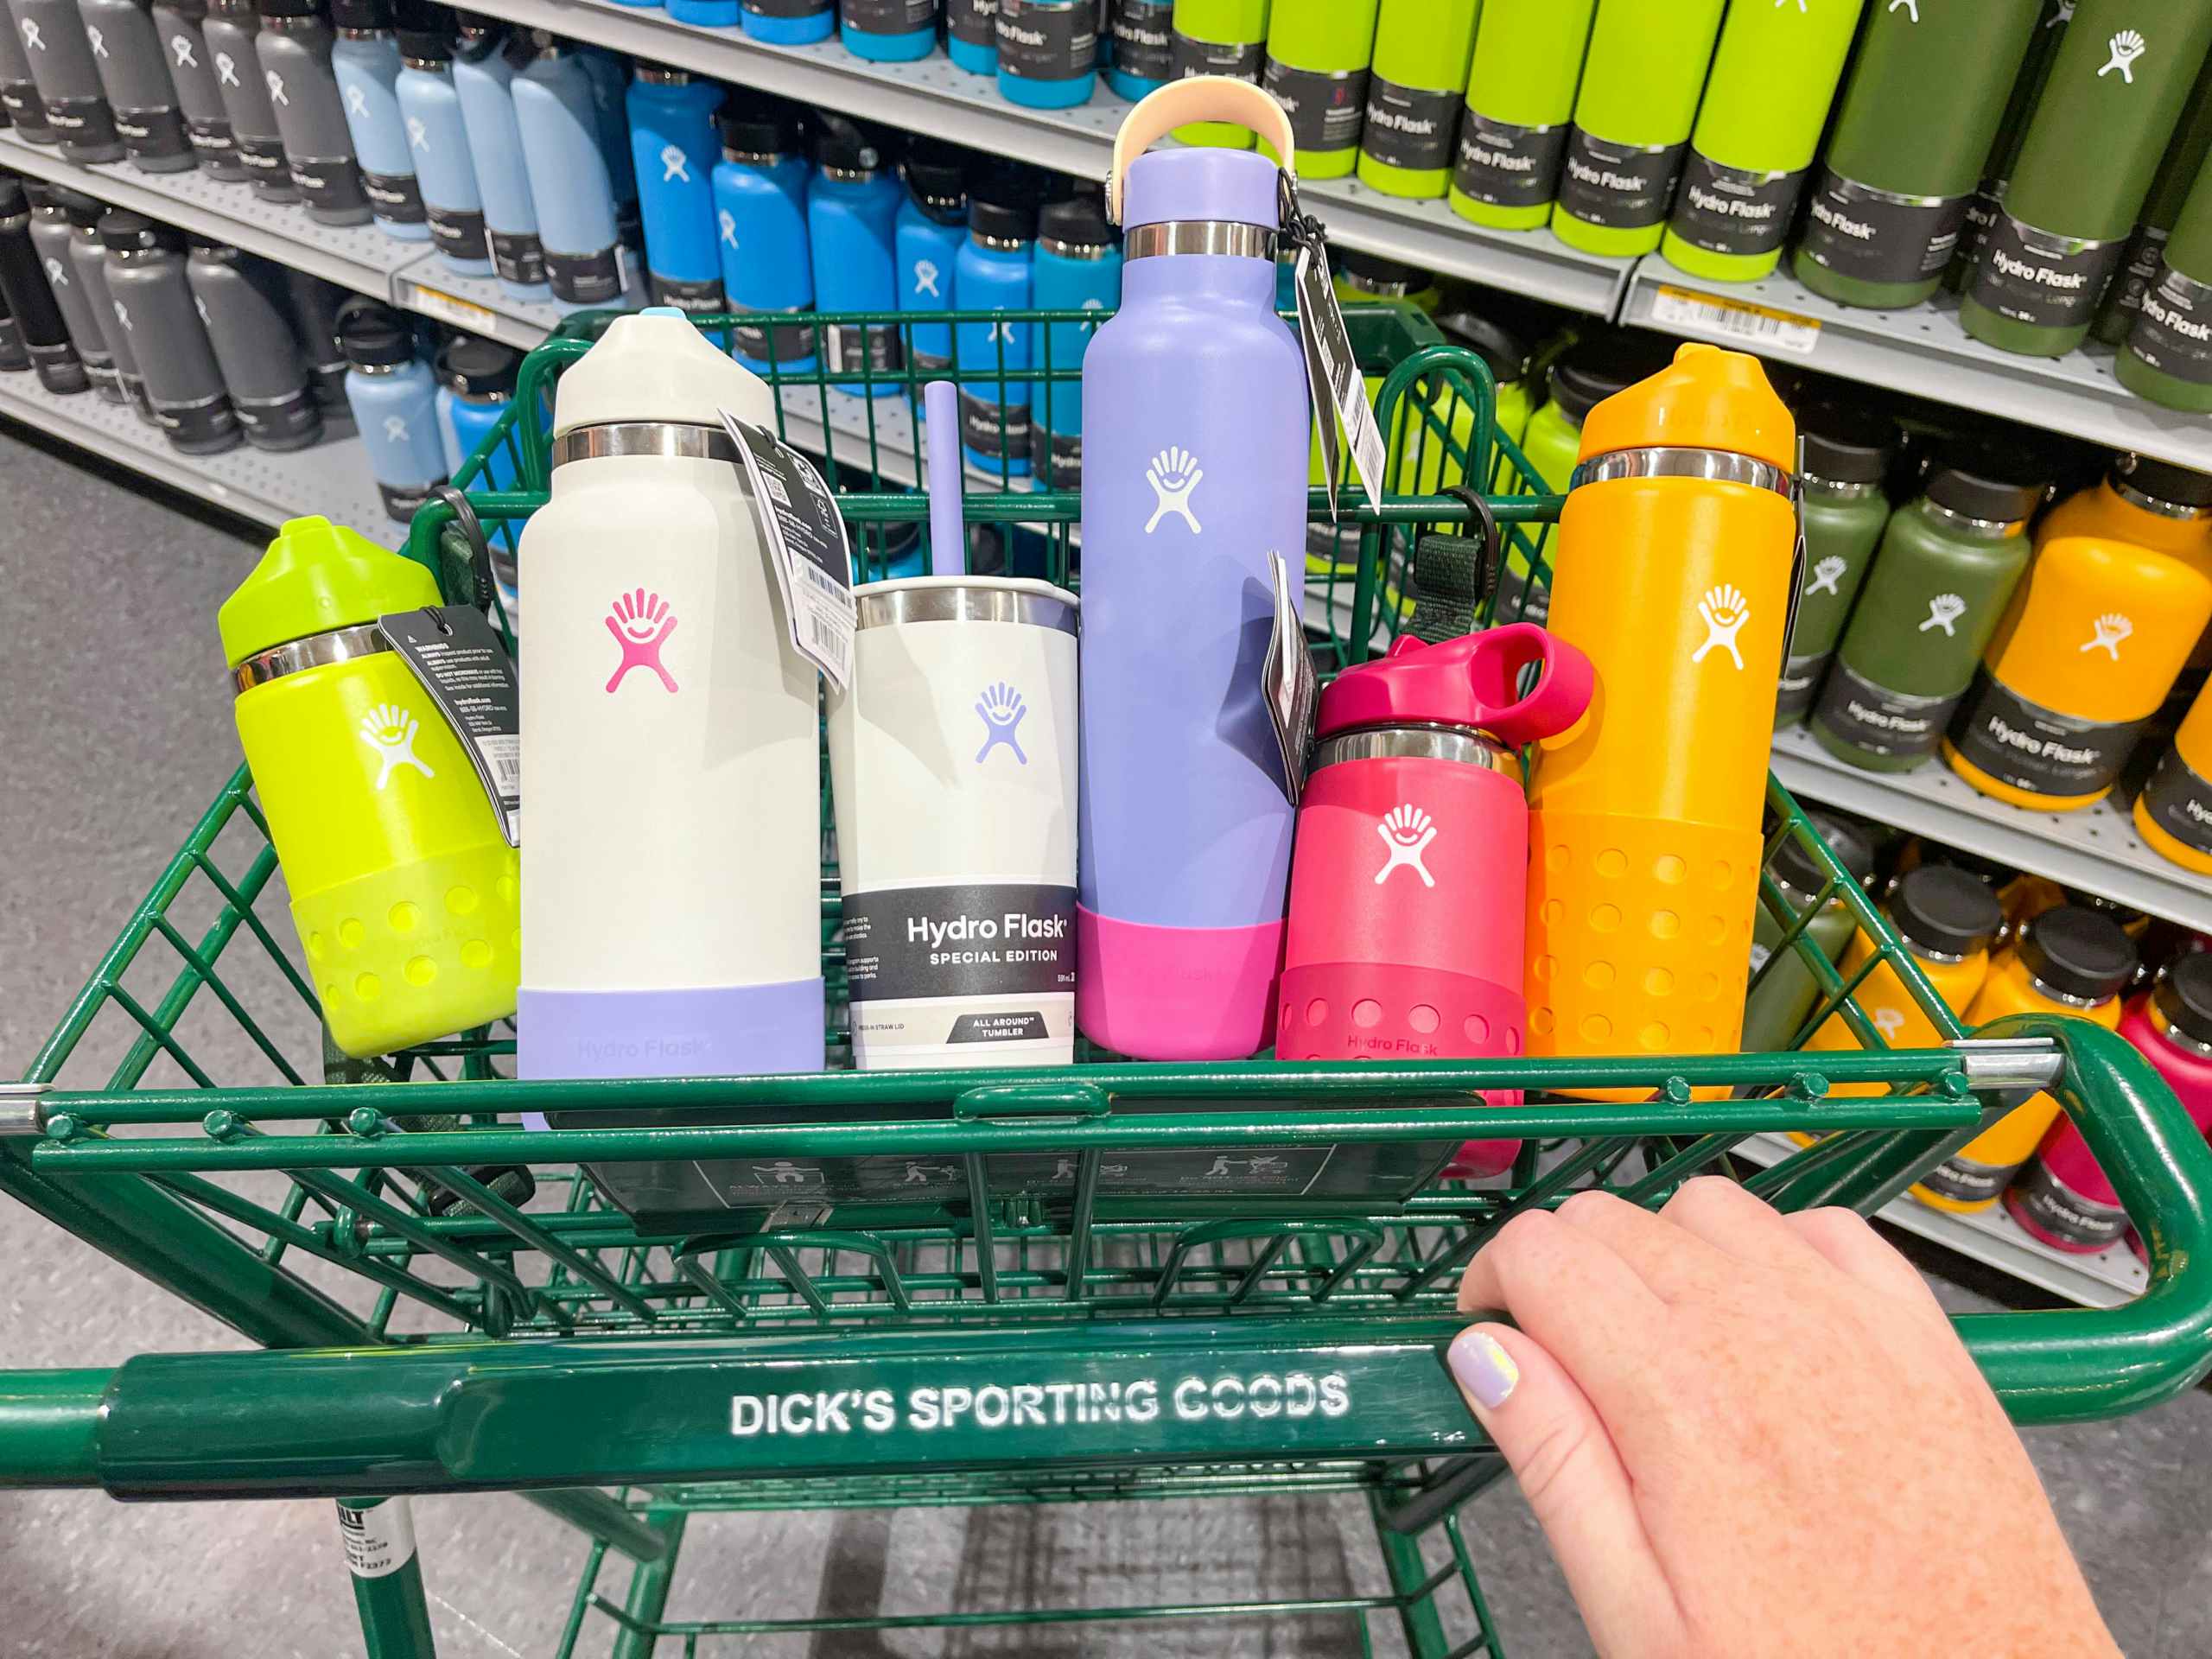 hydro flask water bottle in a dicks sporting goods cart